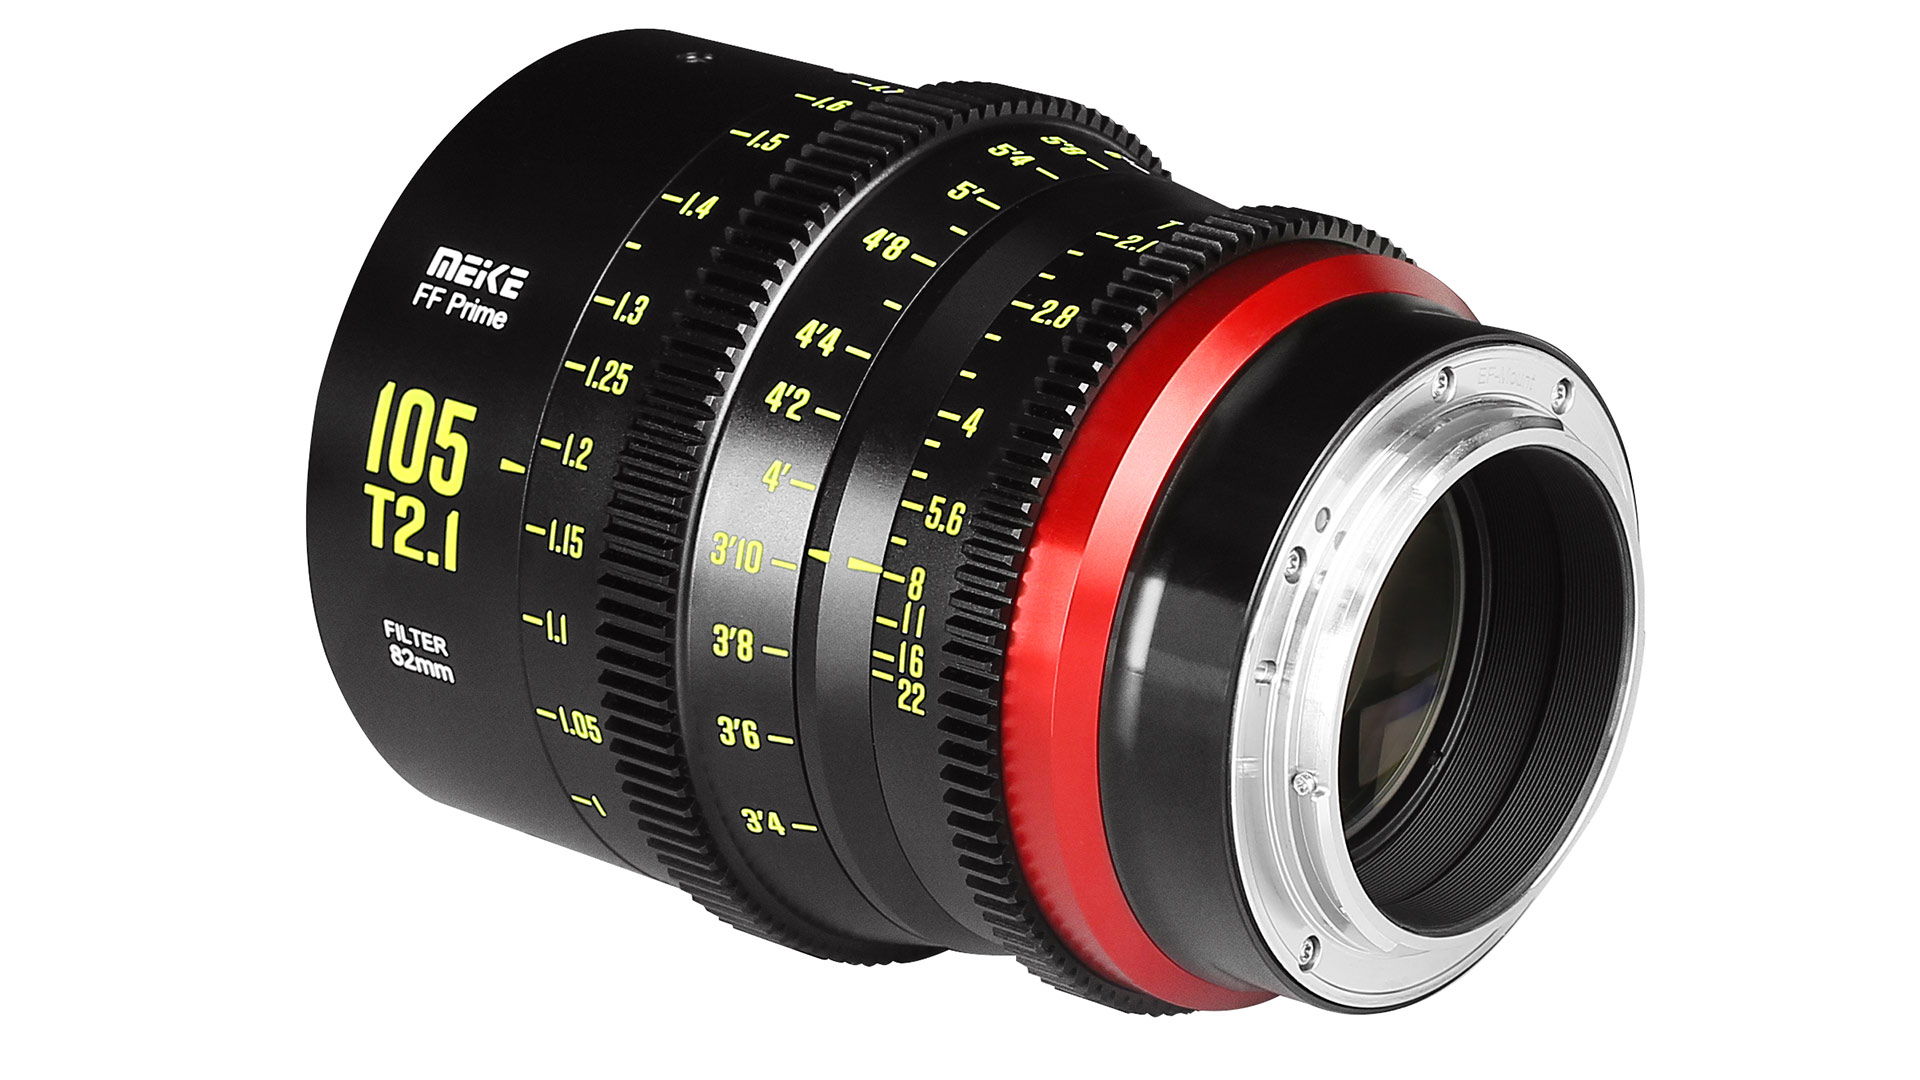 Meikeが105mm T2.1 フルサイズ対応シネレンズを発表 | CineD